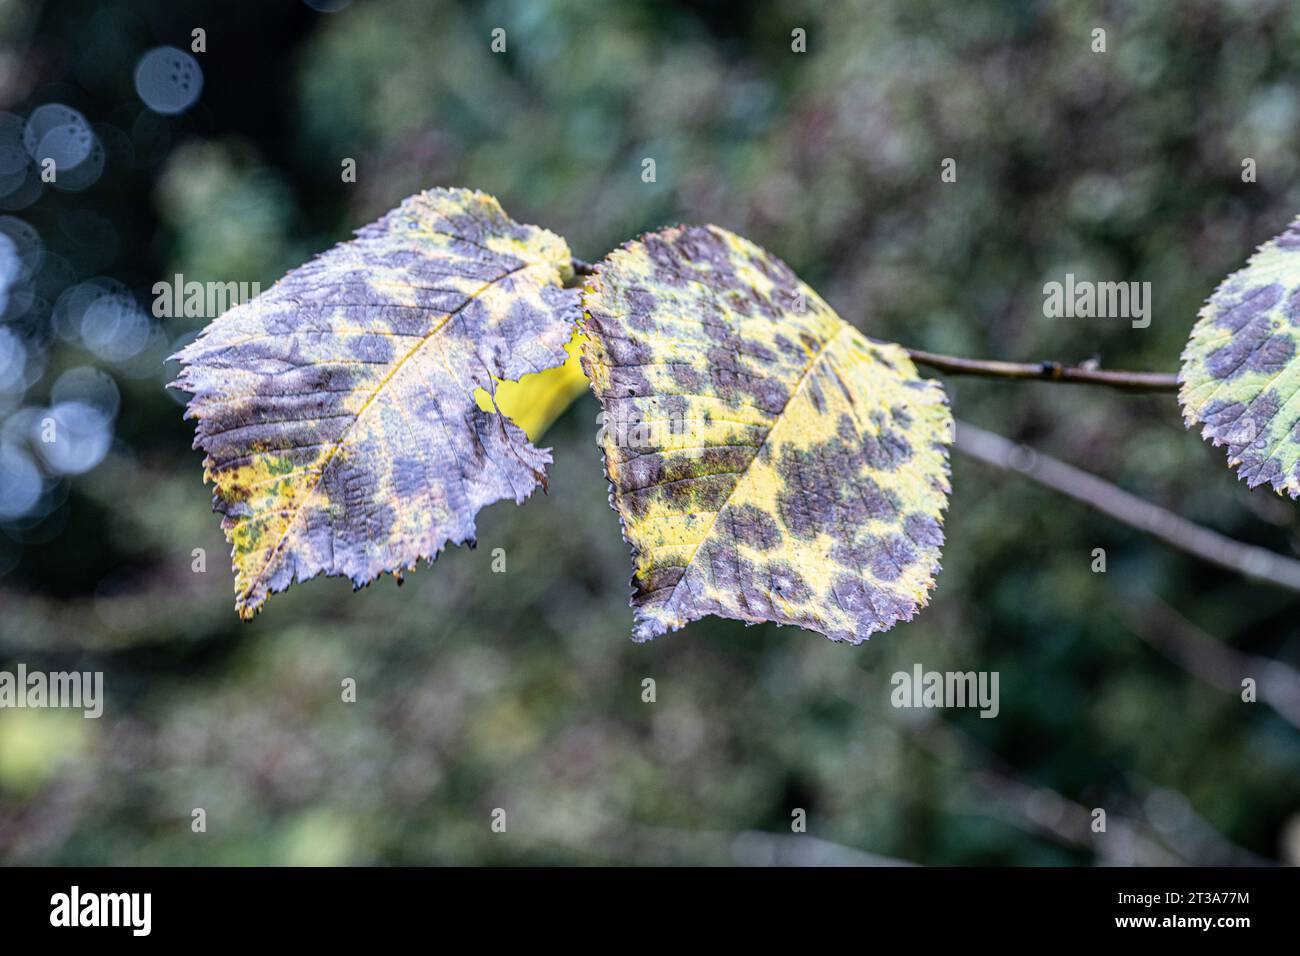 Wych Elm, Ulmus glabra, autumn leaves in rain with blackspot fungus Stock Photo